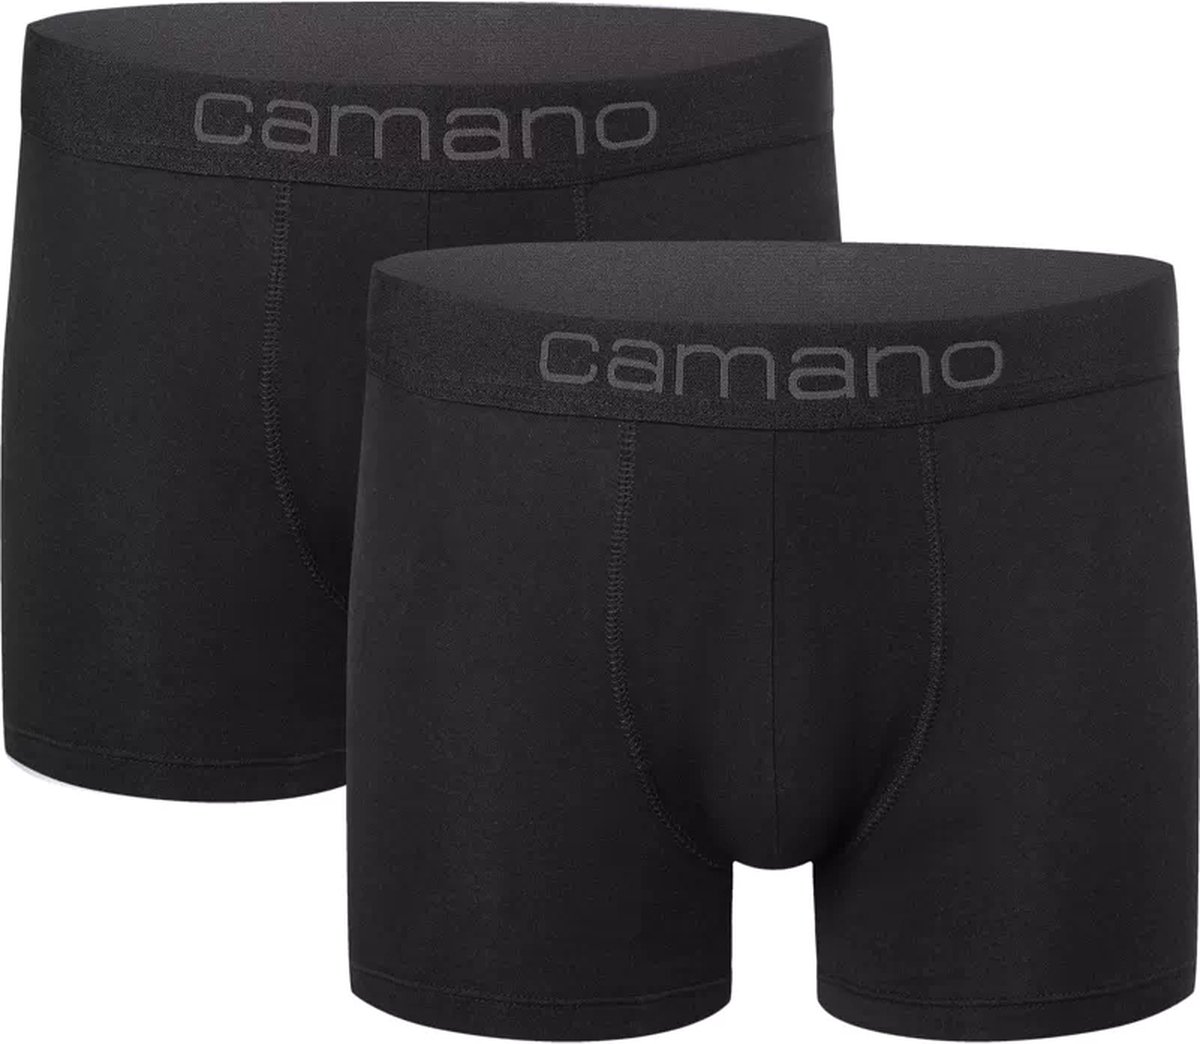 Camano - Boxershorts - High Comfort - Katoen - Stretch - Top Boxers - Zwart - XL